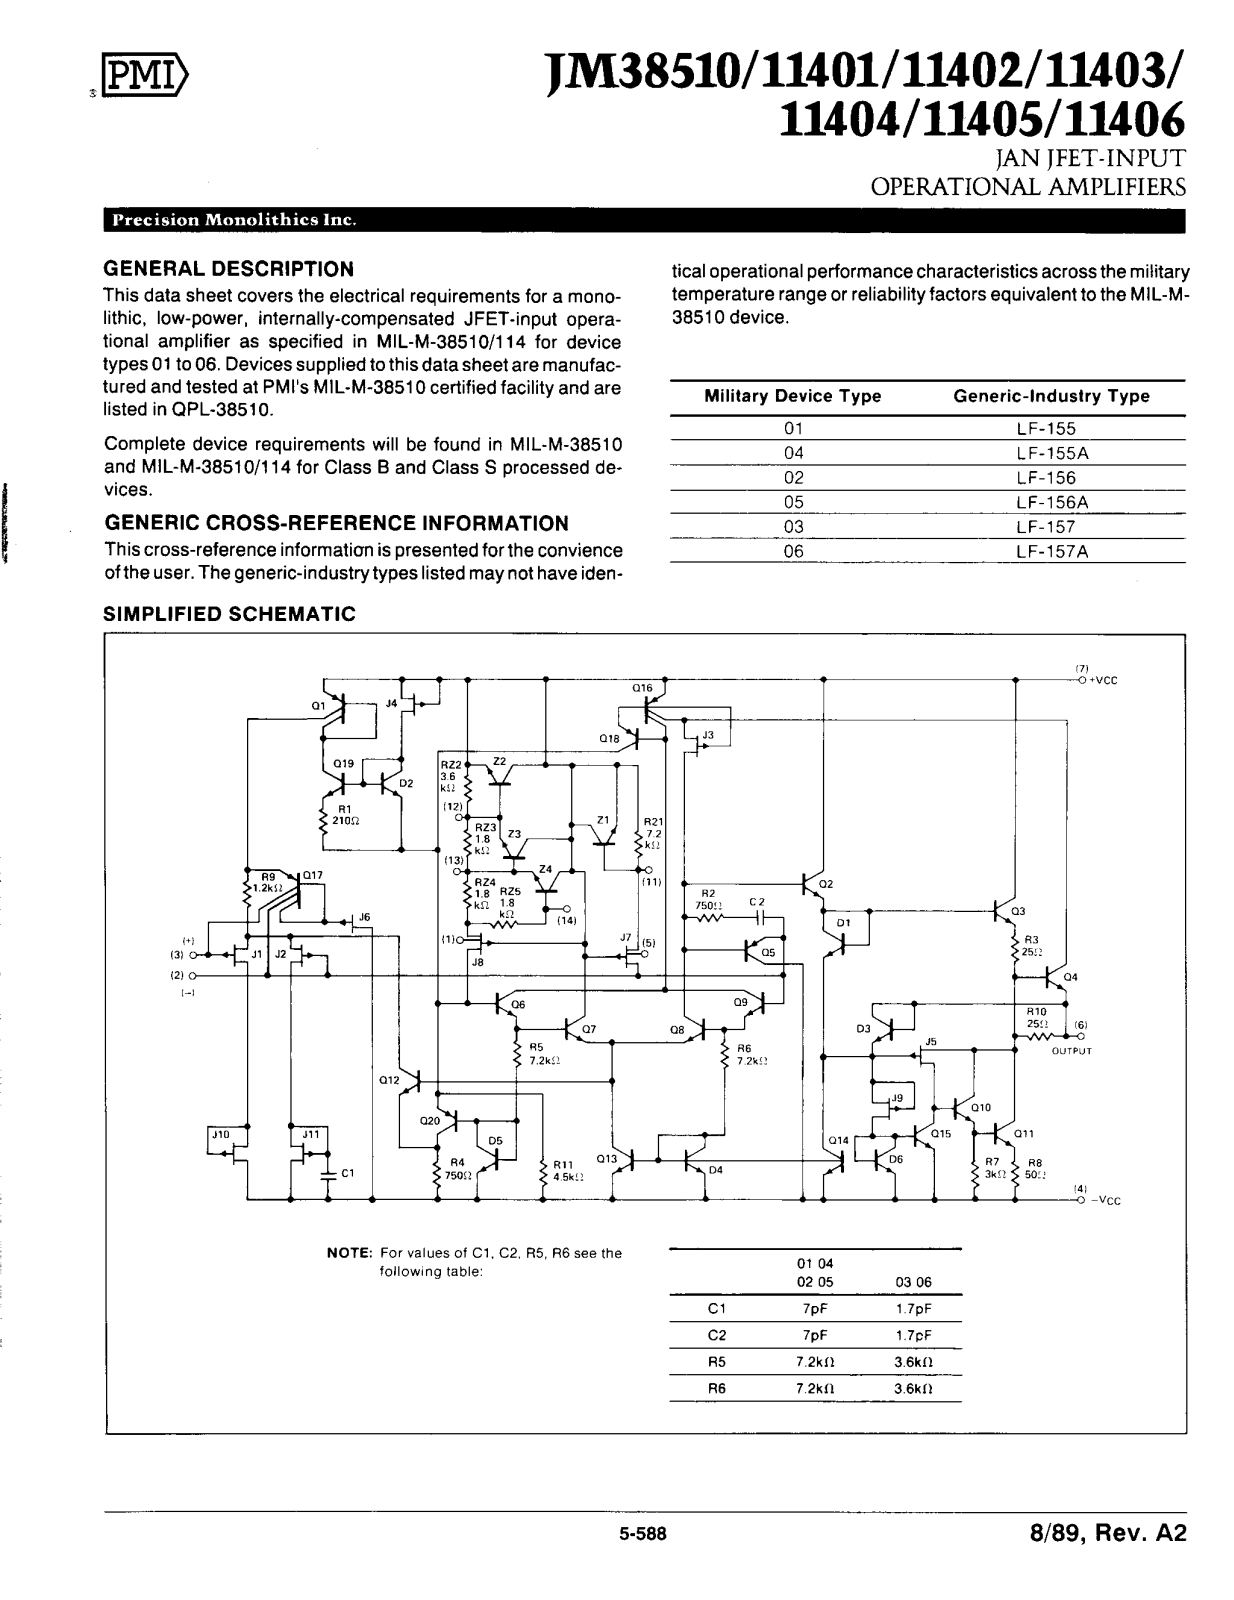 LG JM 11402, JM 38510, JM 11401, JM 1140, JM 11403 Service Manual